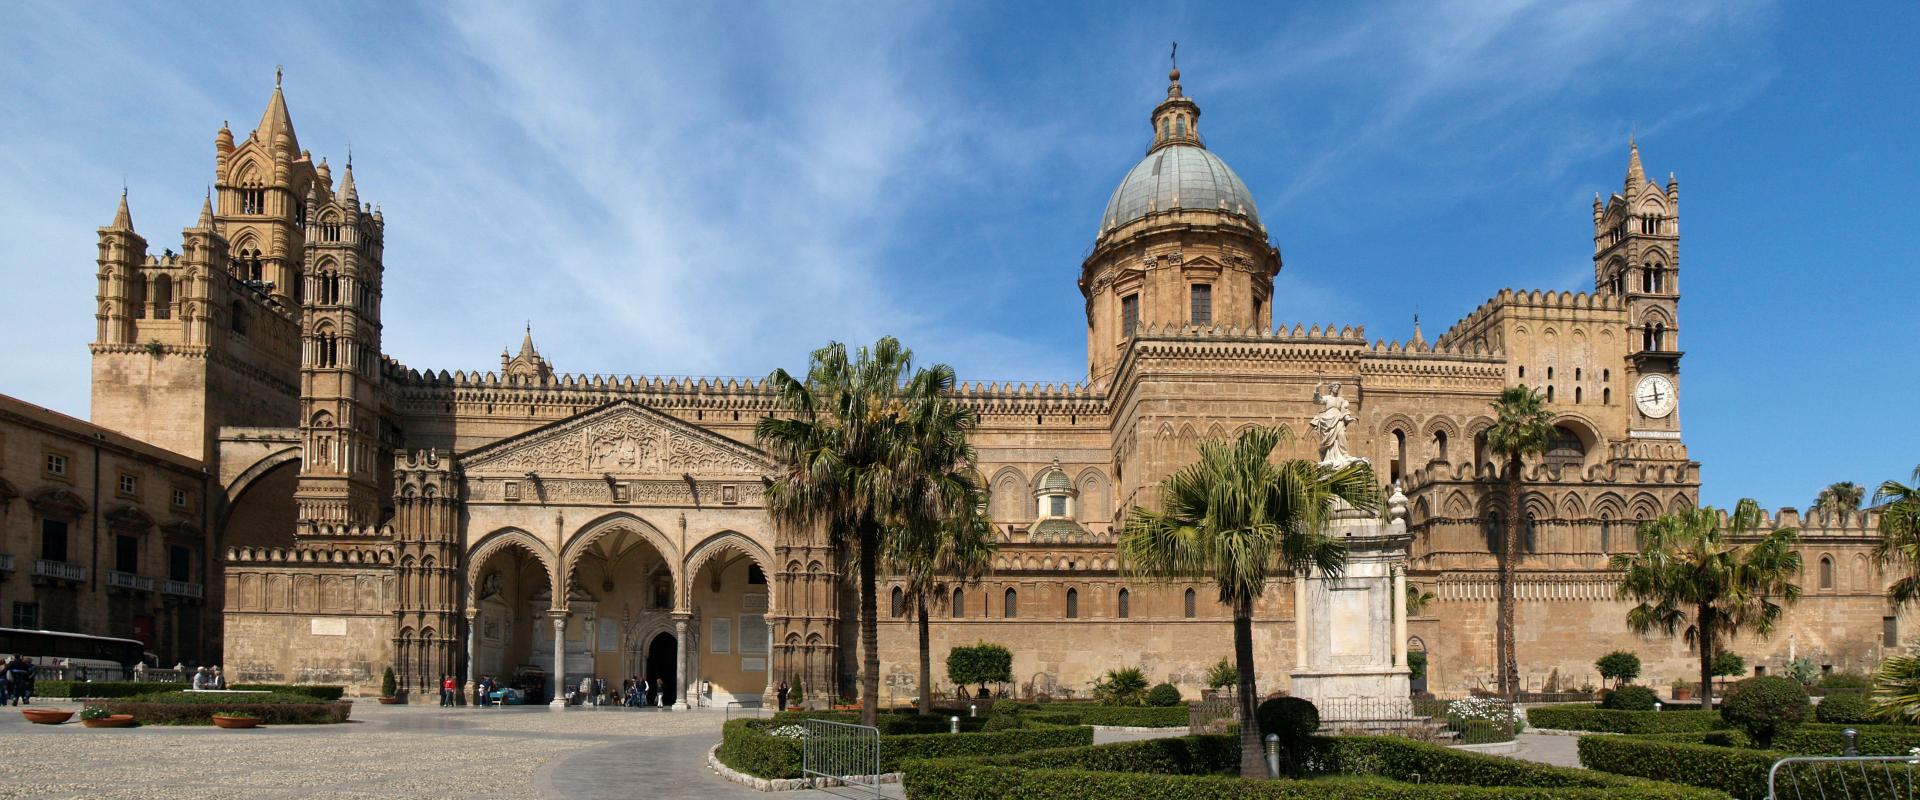 Visit of Palermo